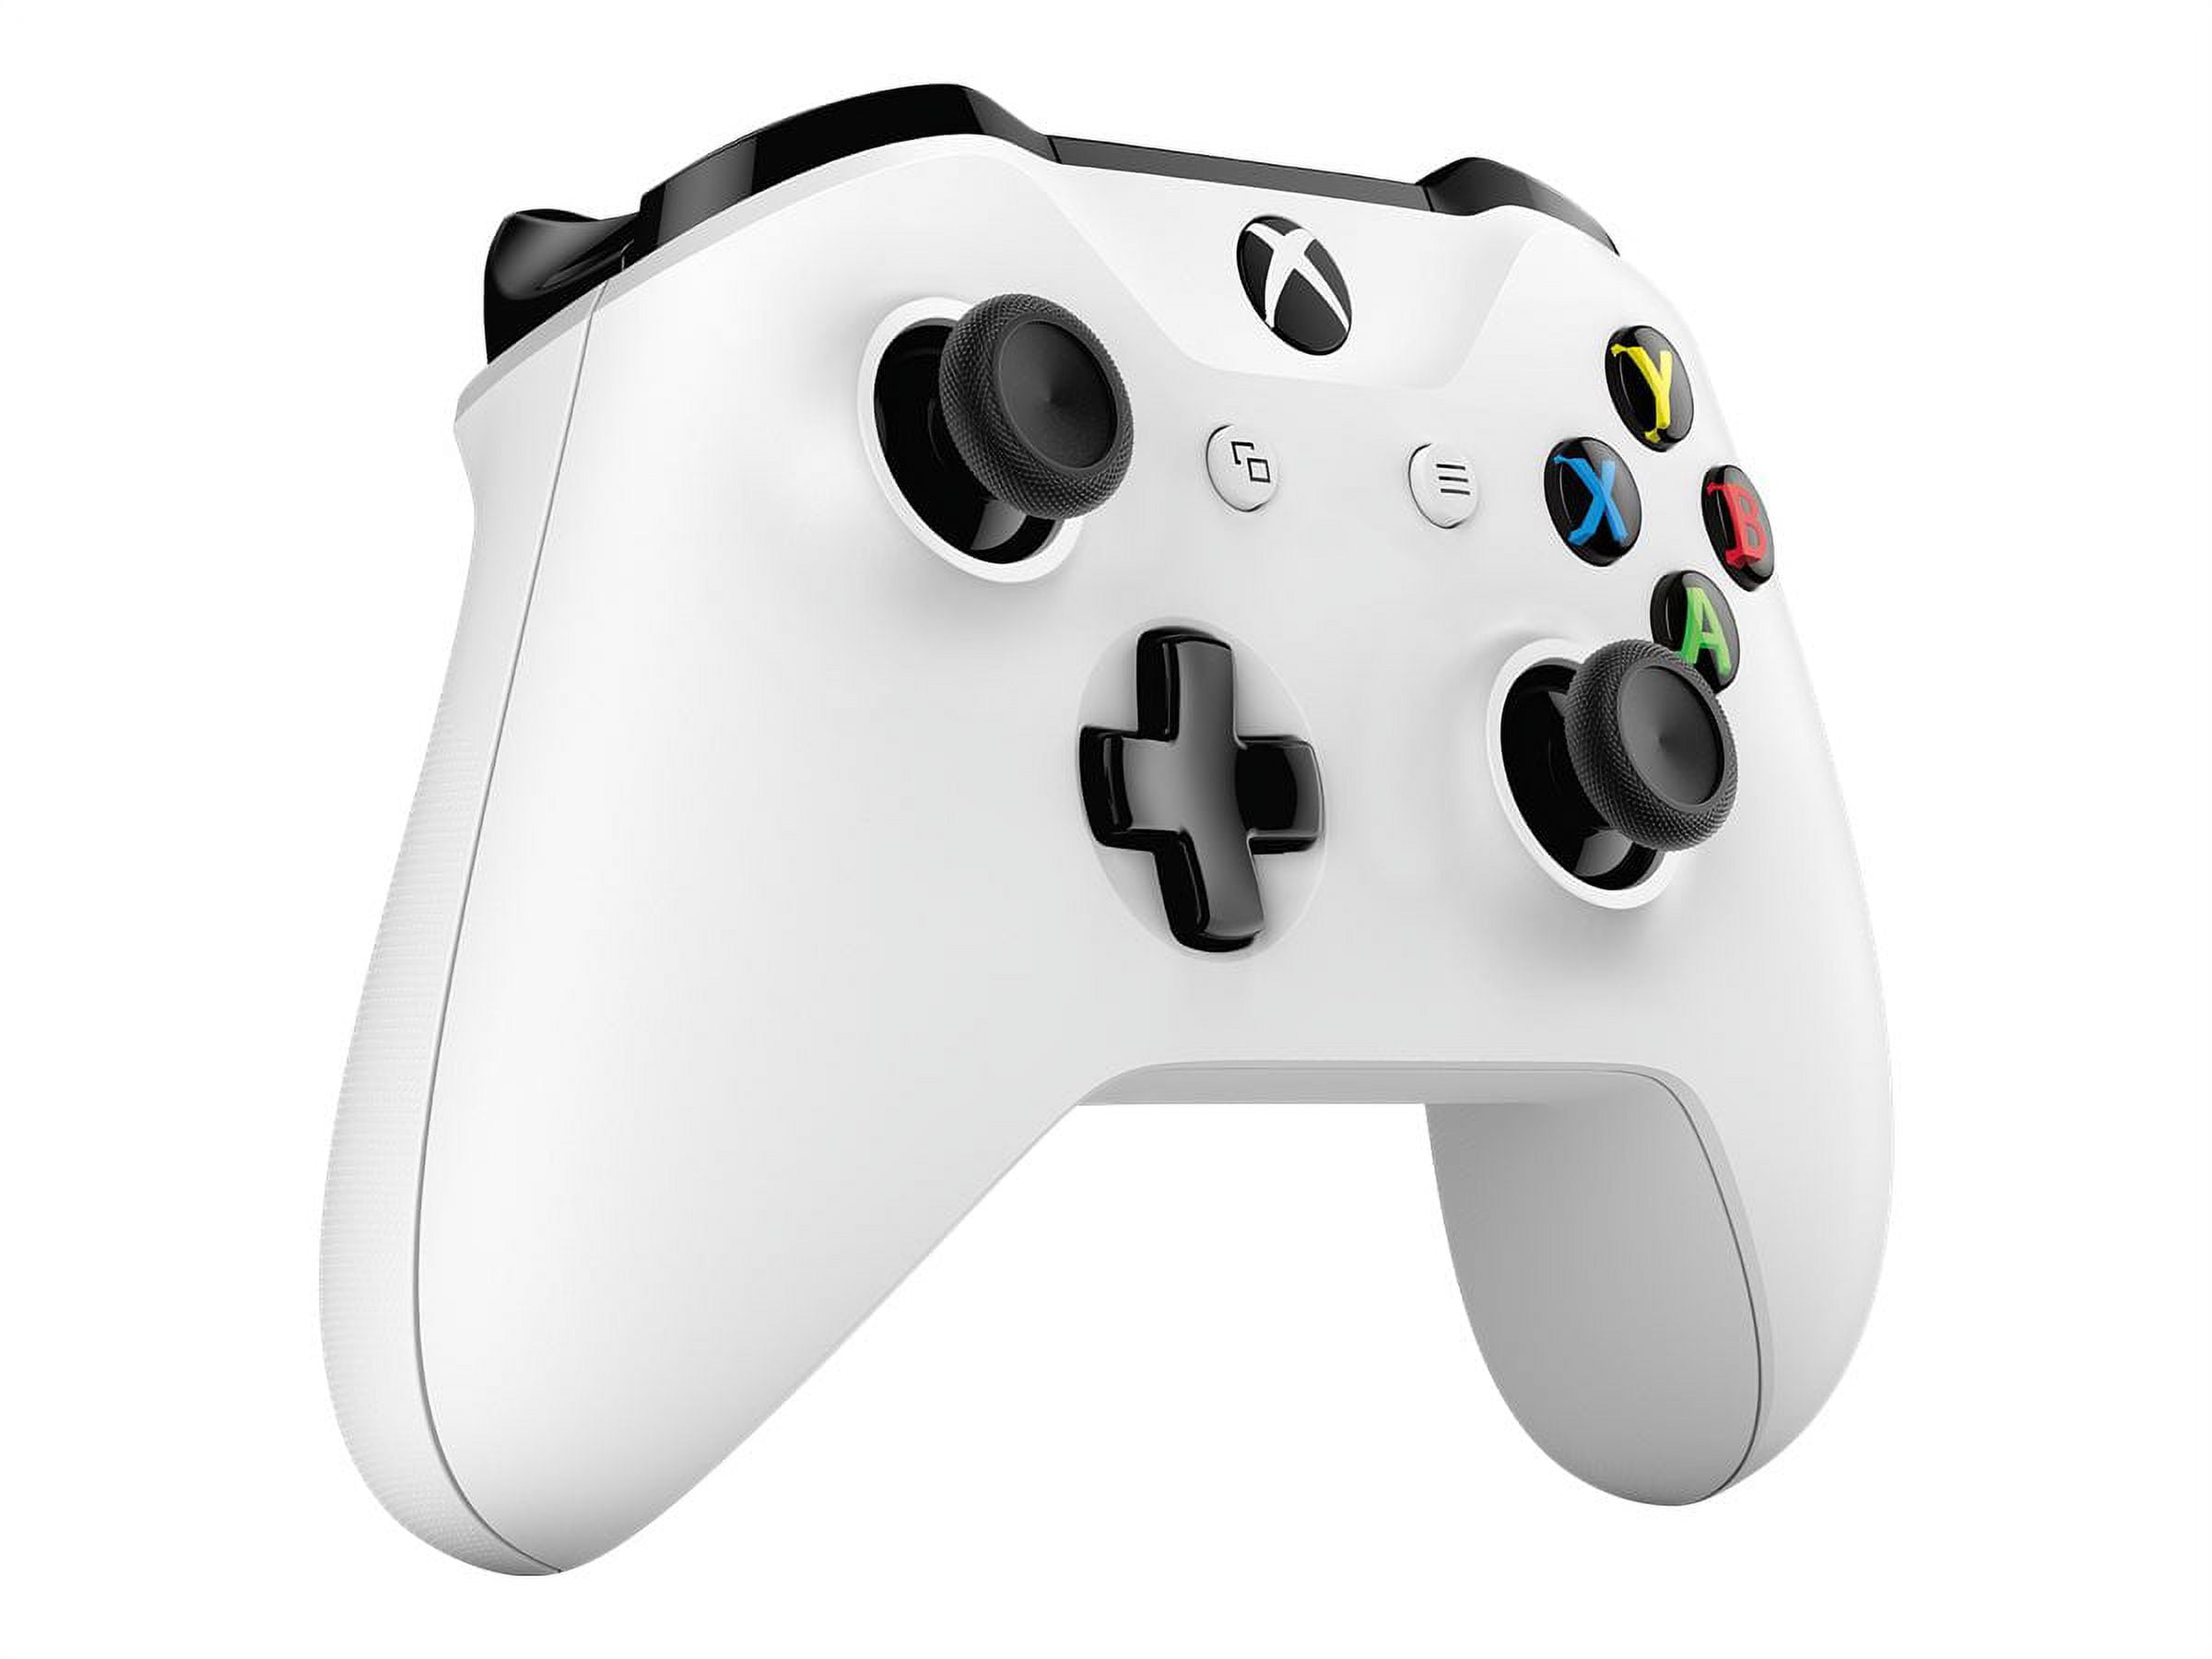 Microsoft Xbox One S Roblox Bundle 234-01214 B&H Photo Video